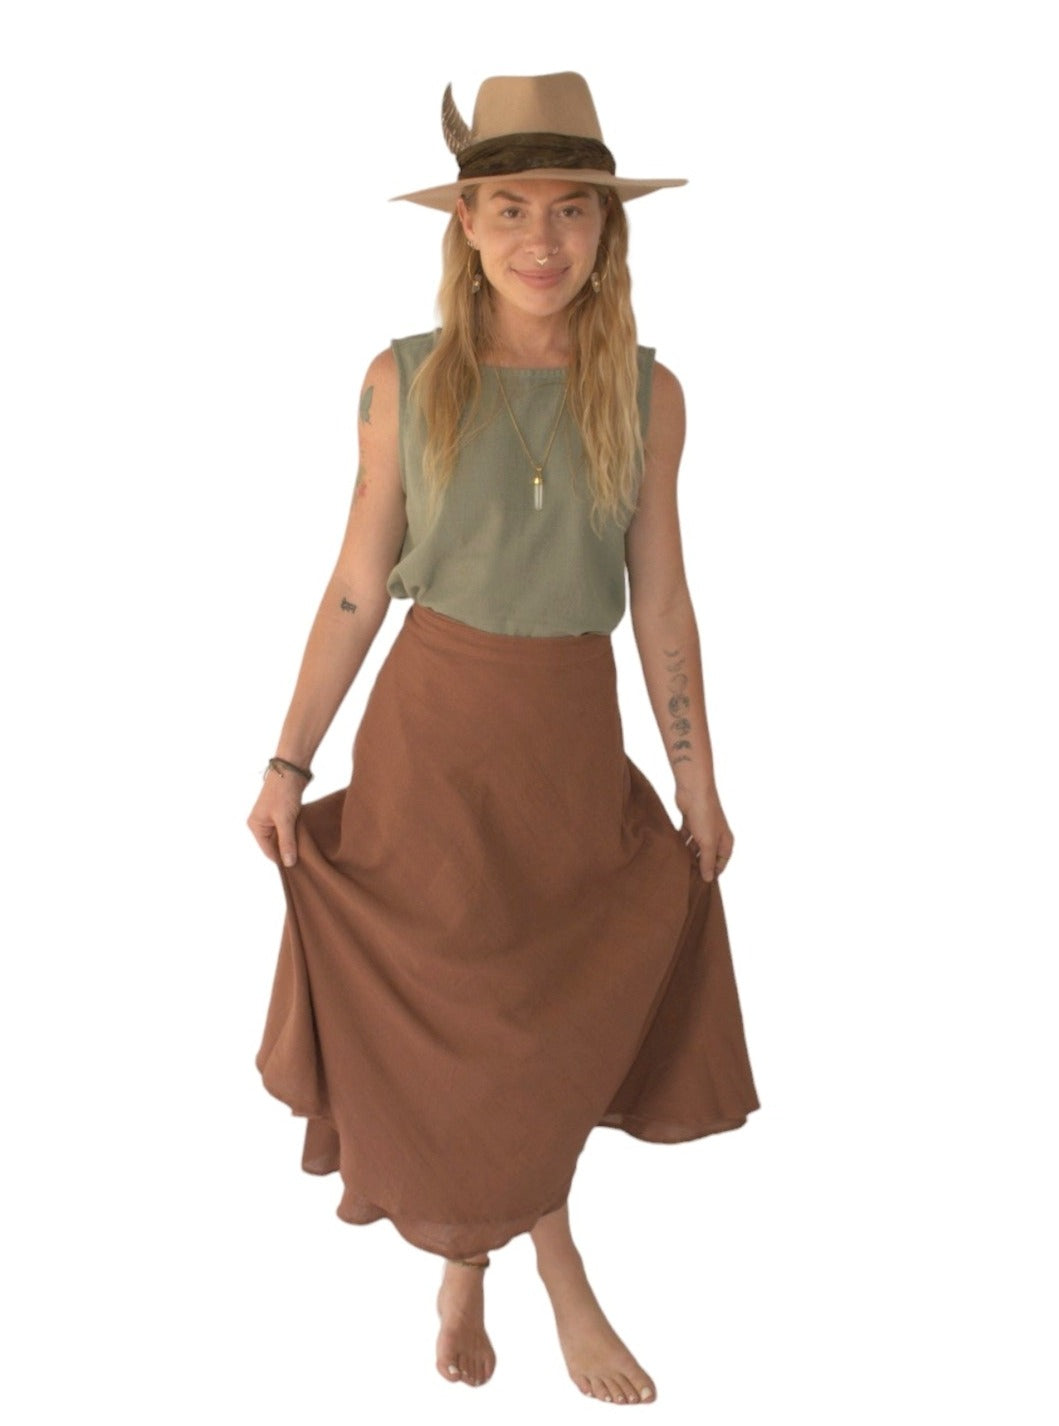 Organic Cotton Terracotta Wrap Skirt